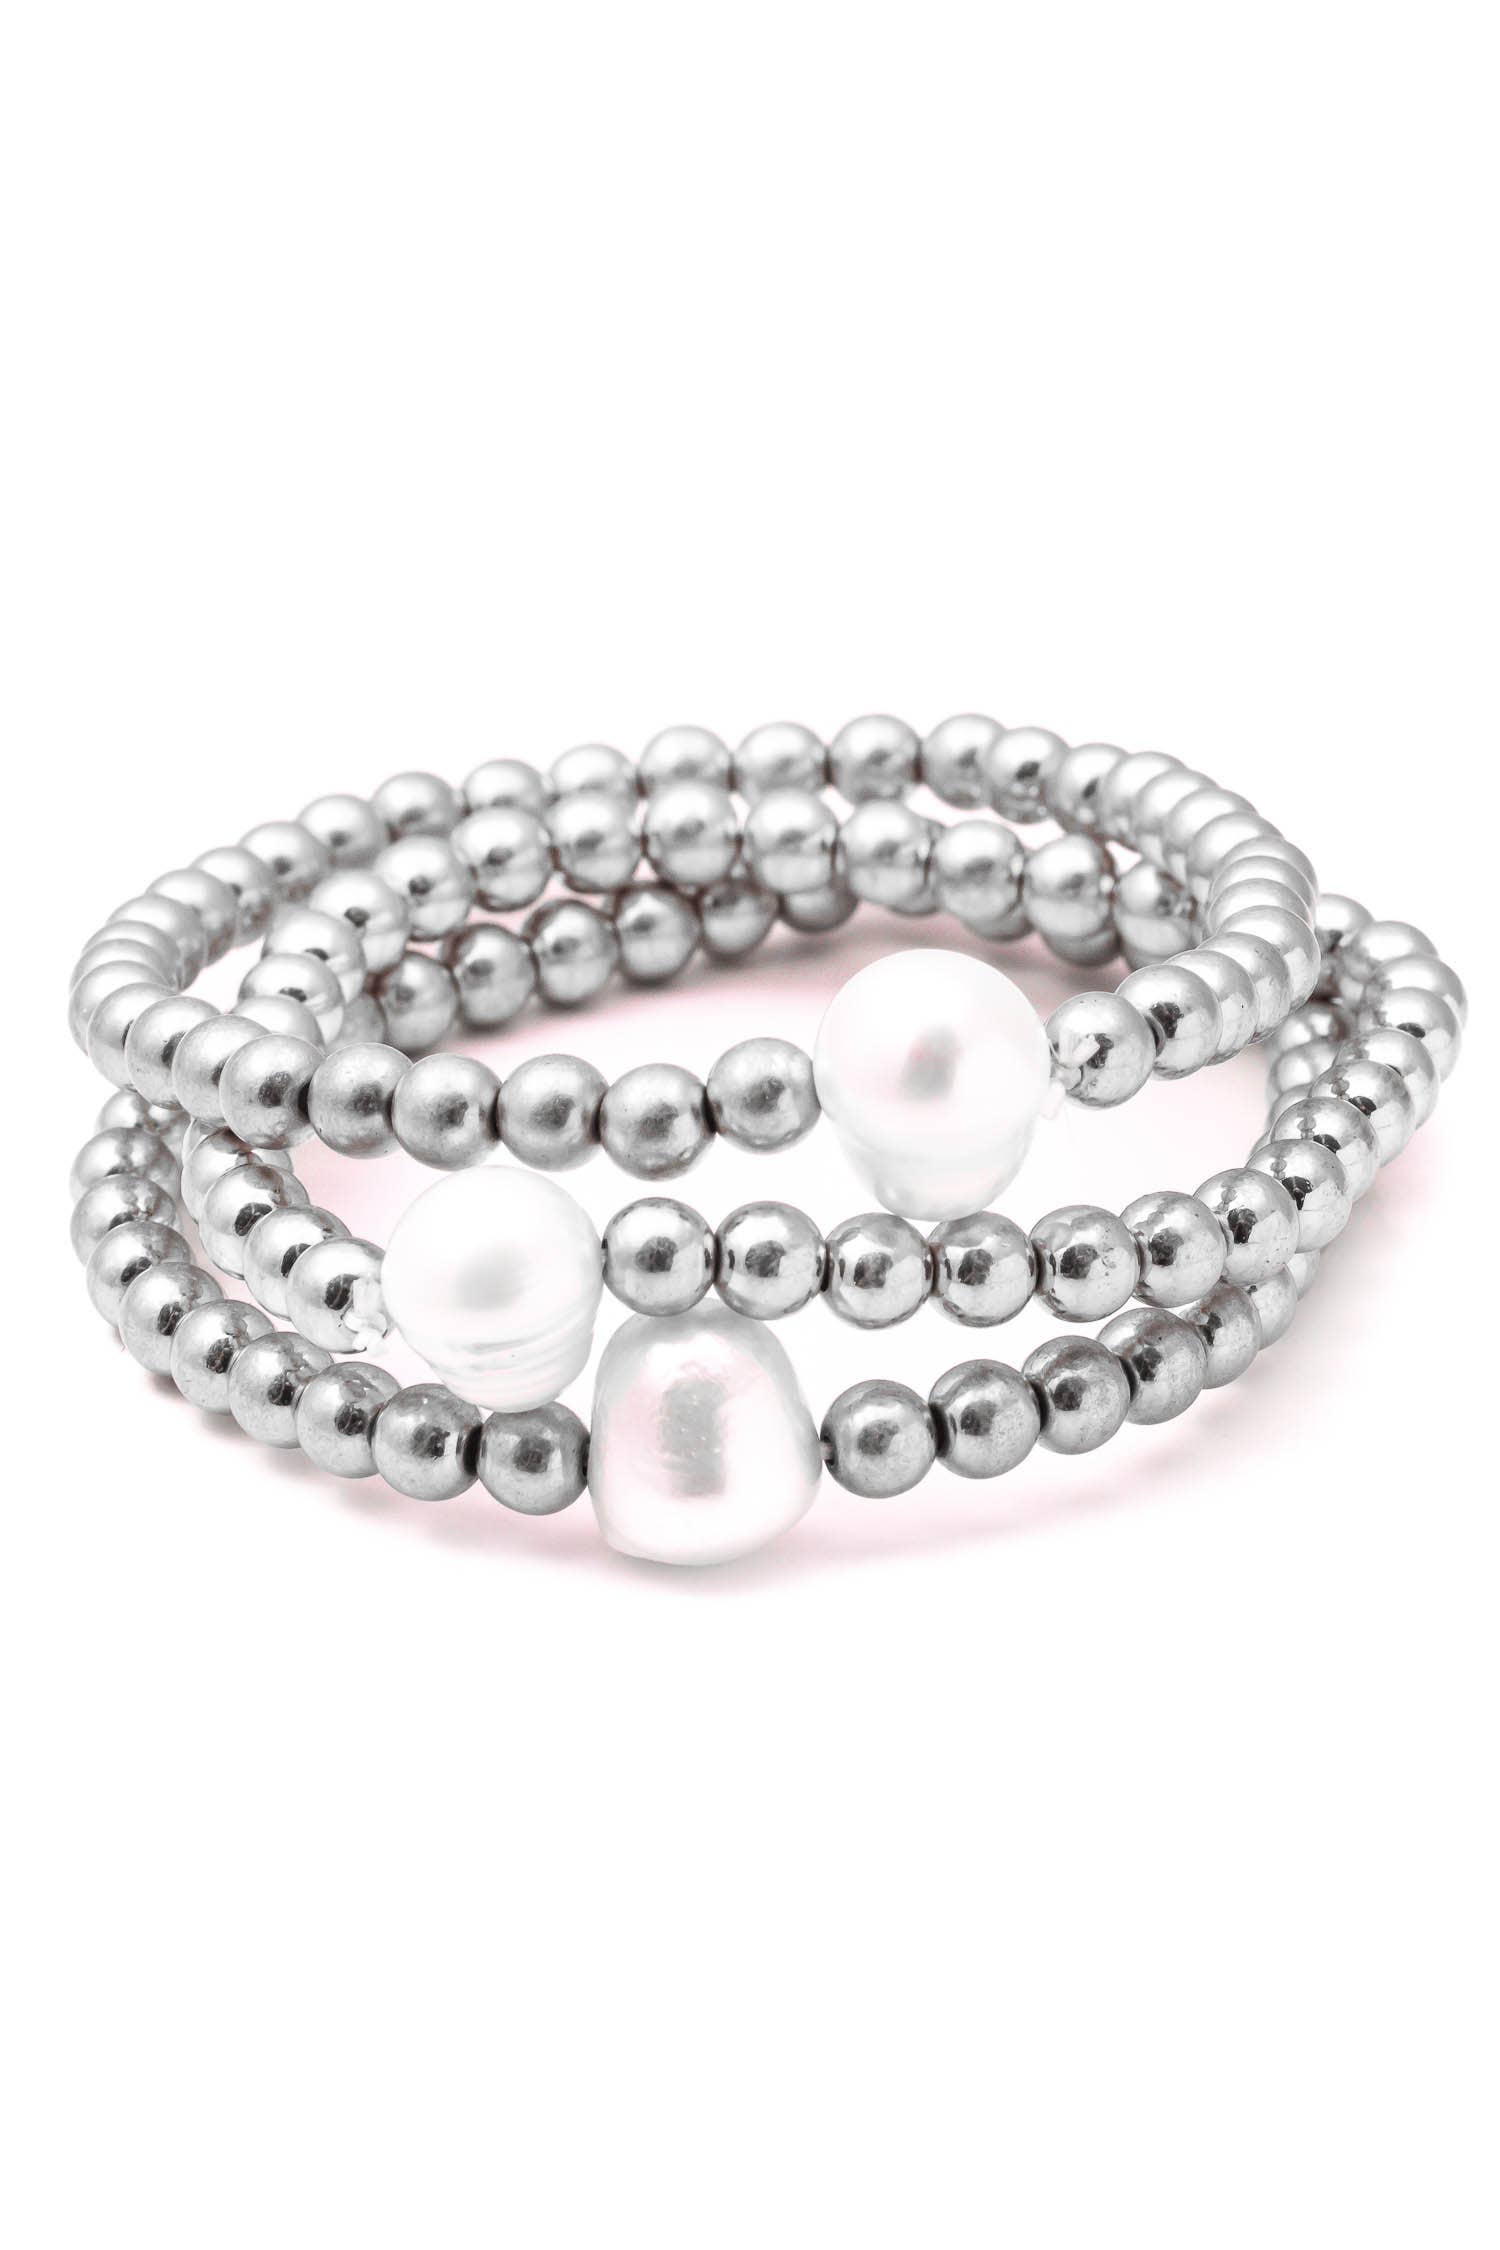 Anarchy Street - Pearly Charm Beaded Bracelet Set